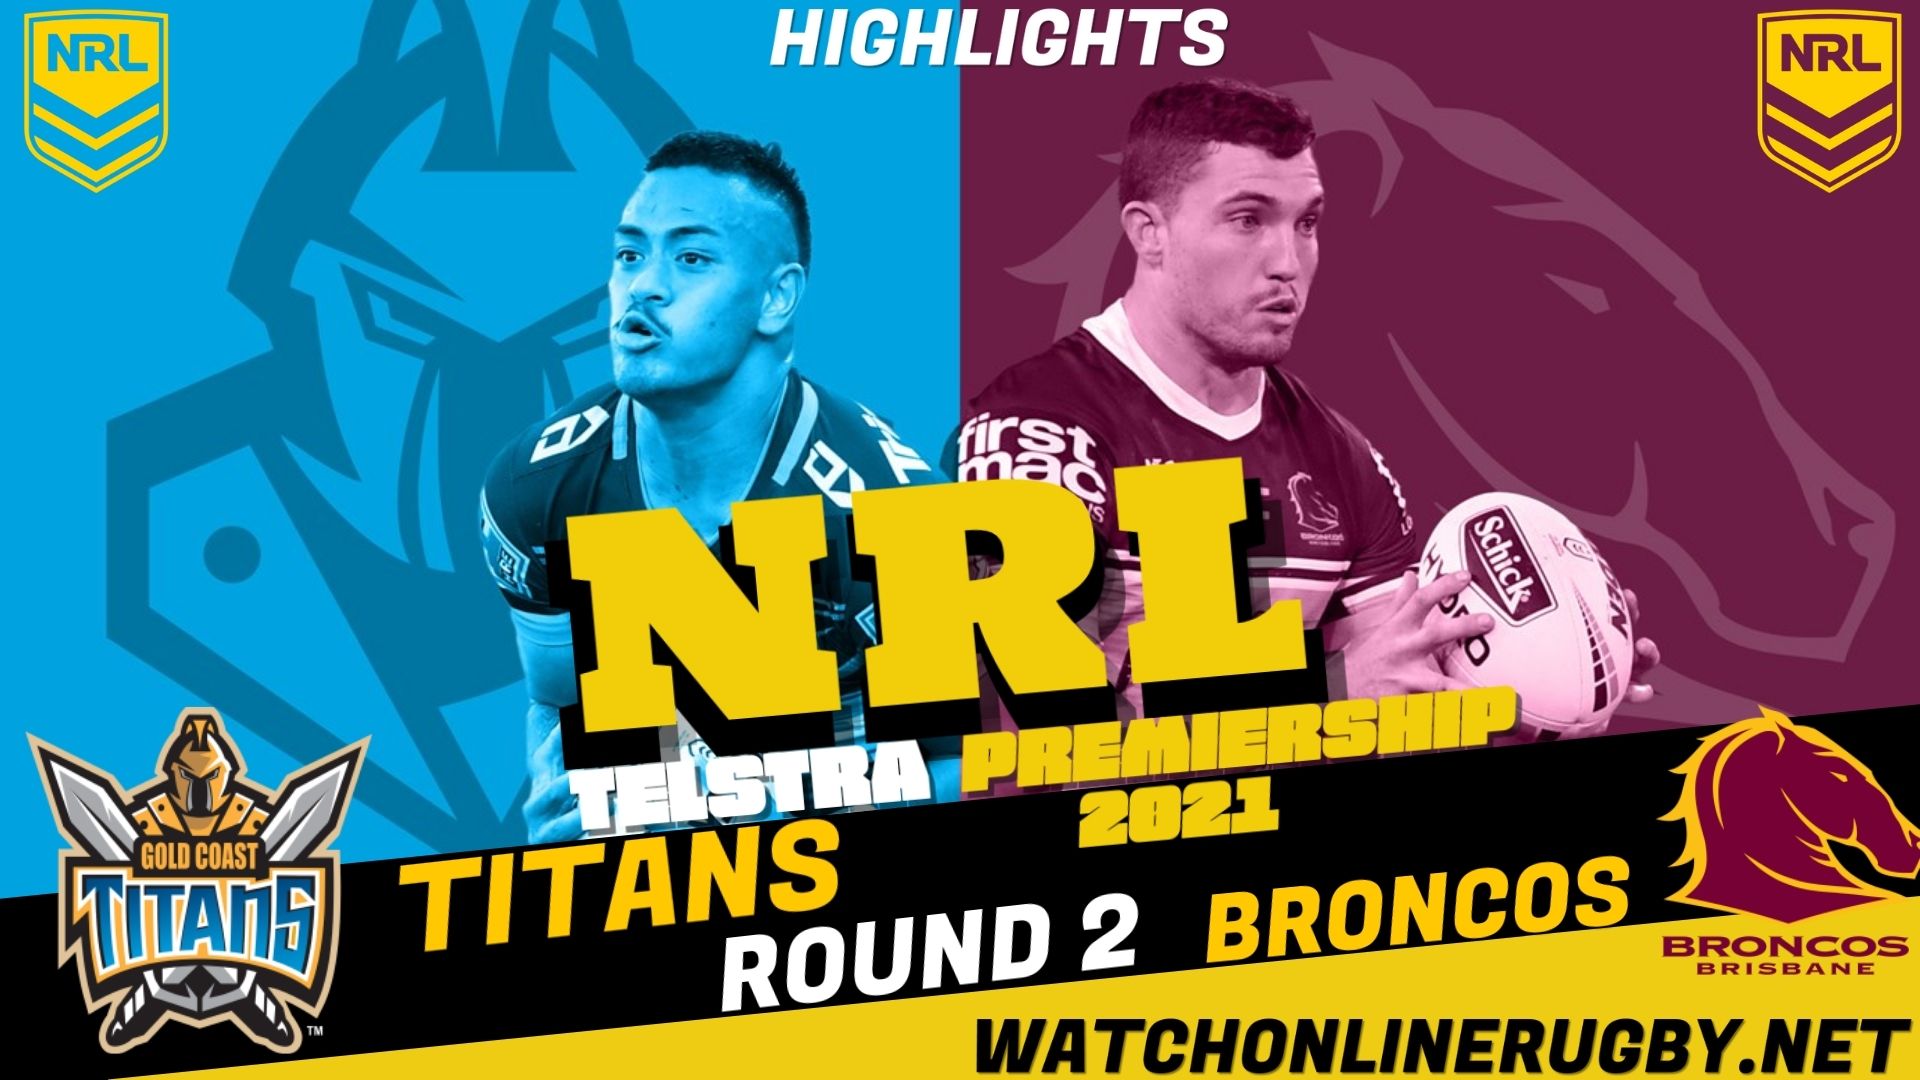 Titans Vs Broncos Highlights RD 2 NRL Rugby